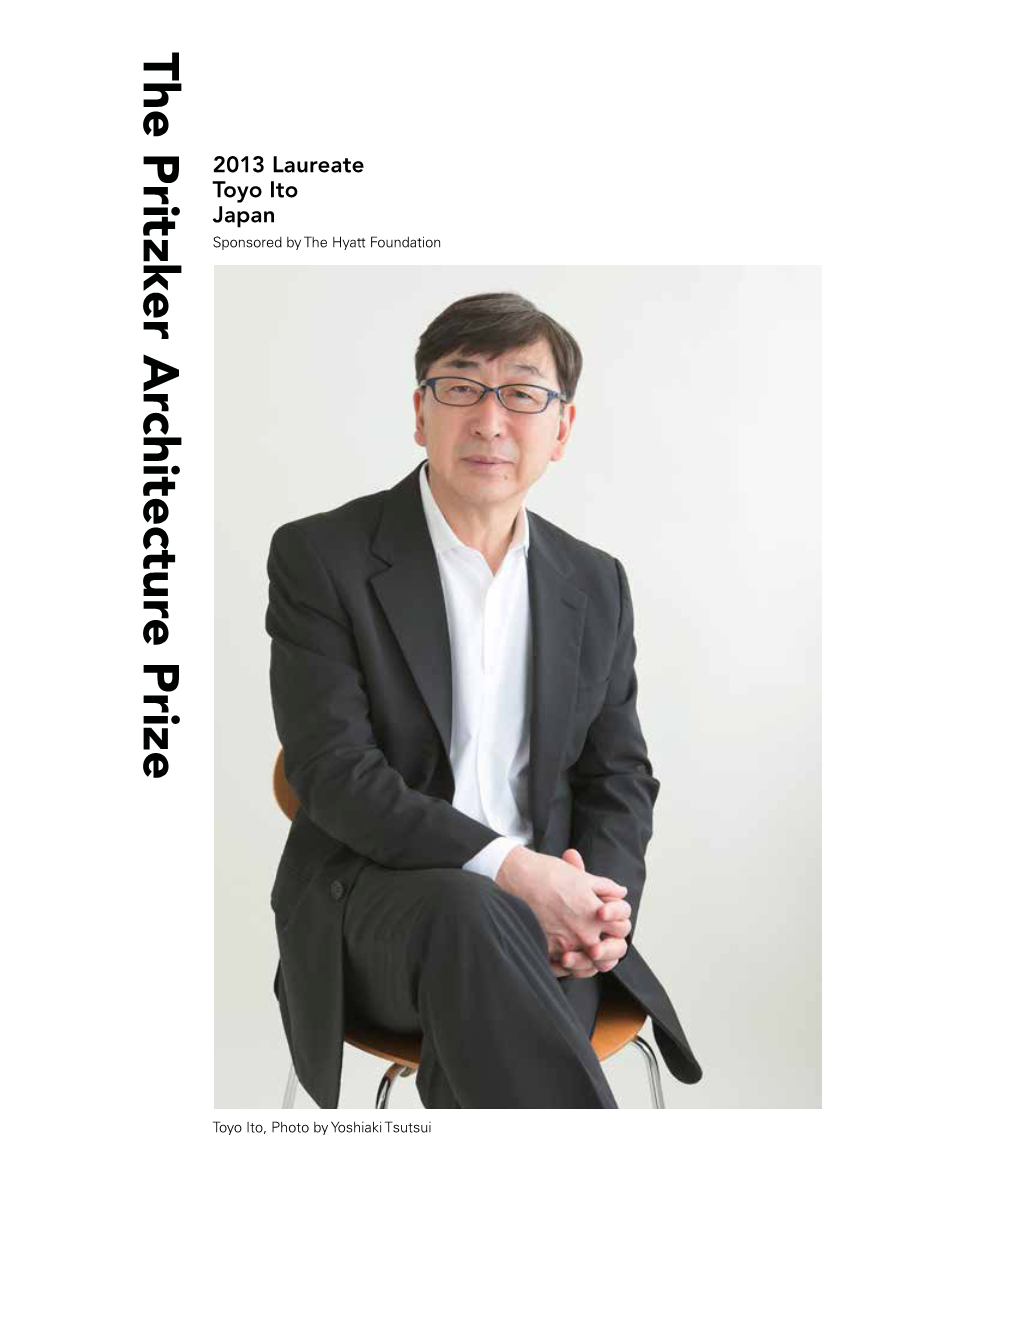 2013 Laureate Toyo Ito Japan Sponsored by the Hyatt Foundation